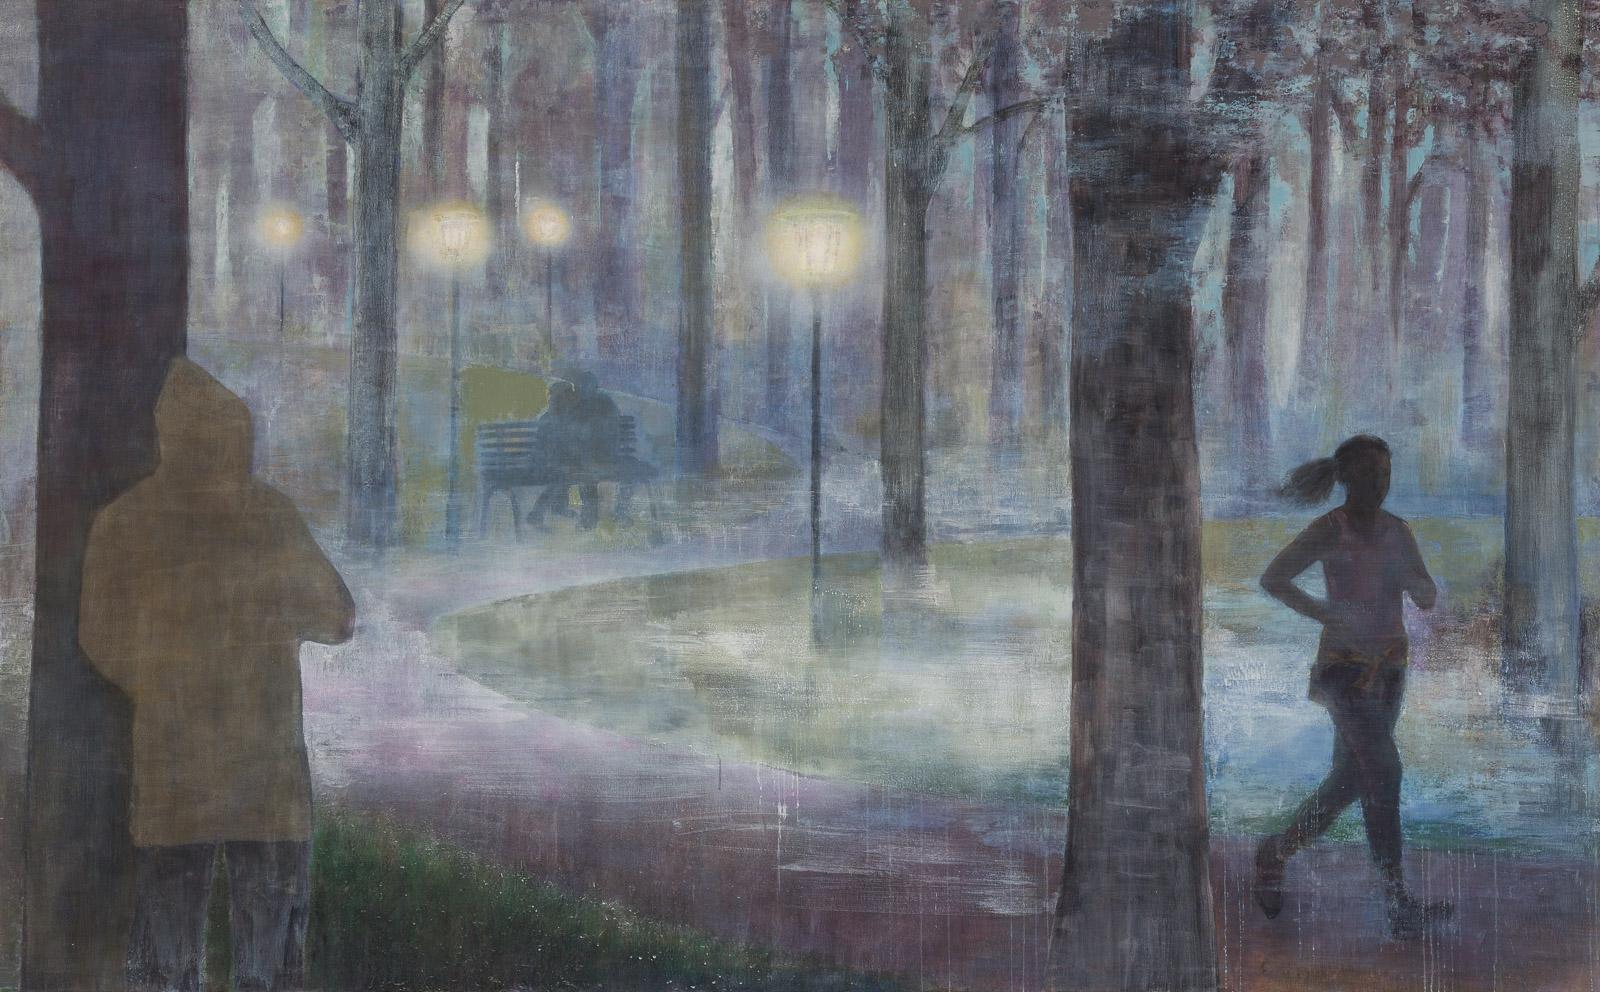 Kathrin Rank, fog, 2014, Öl auf Leinwand, 155 cm x 250 cm, Preis auf Anfrage, Galerie Cyprian Brenner